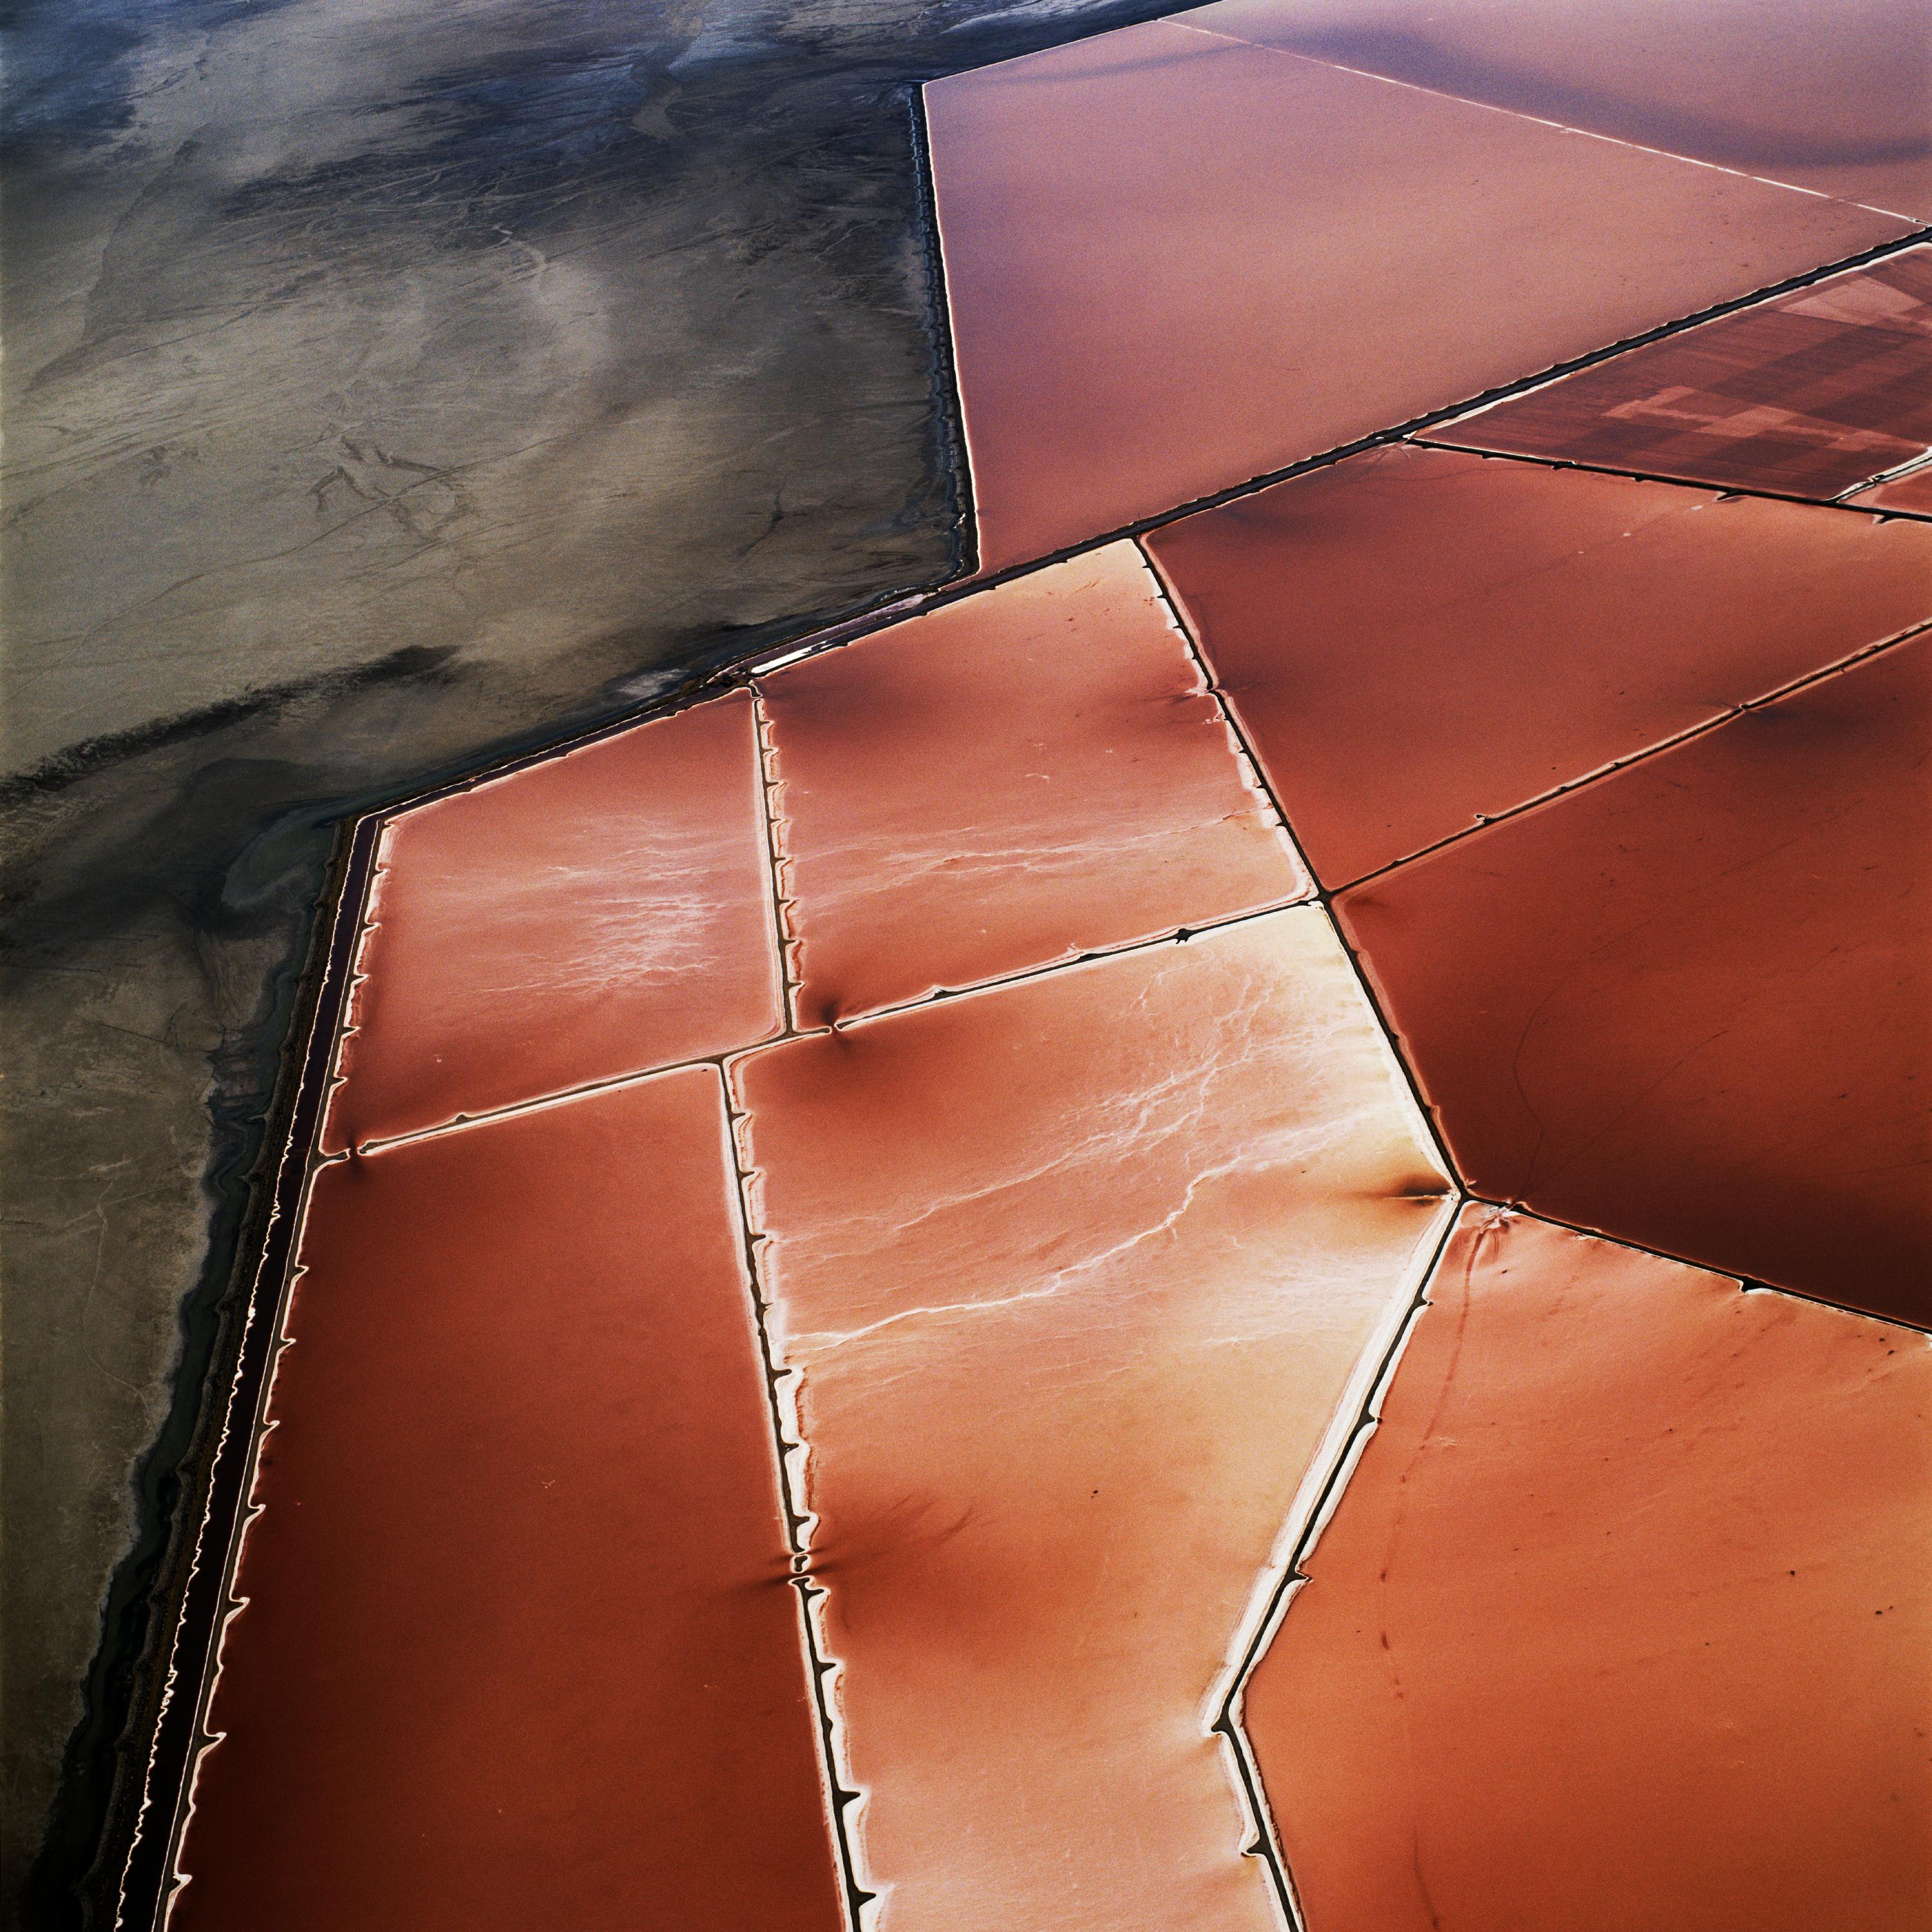 David Maisel Landscape Photograph - Terminal Mirage 45, 2003, Archival Pigment Print, 48 x 48 inches, Ed. of 5+ 2AP